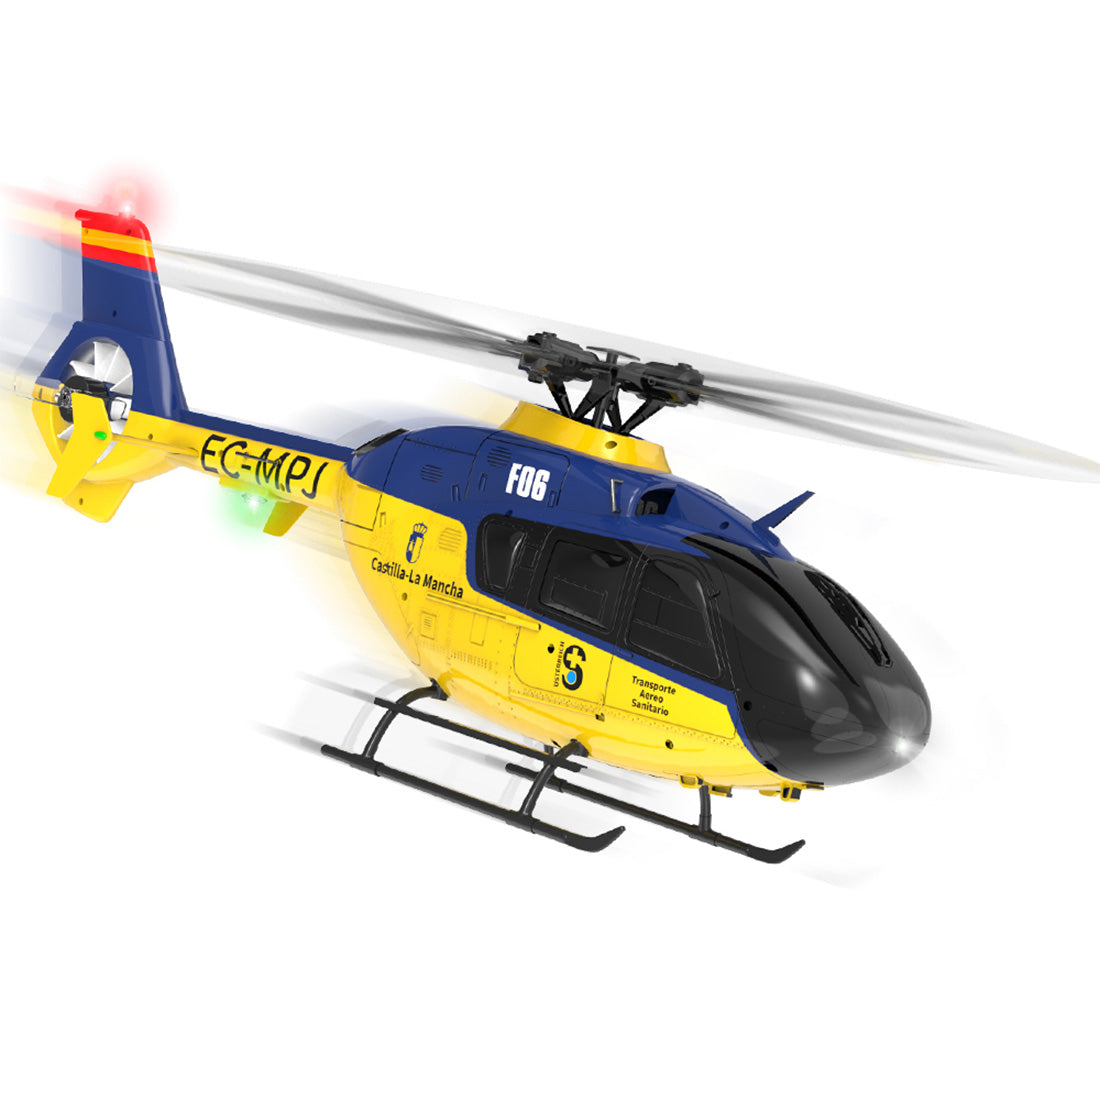 YU XIANG EC-135 1/36 2.4G 6CH Direct Drive Brushless RC 3D/6G Helicopter Model enginediyshop